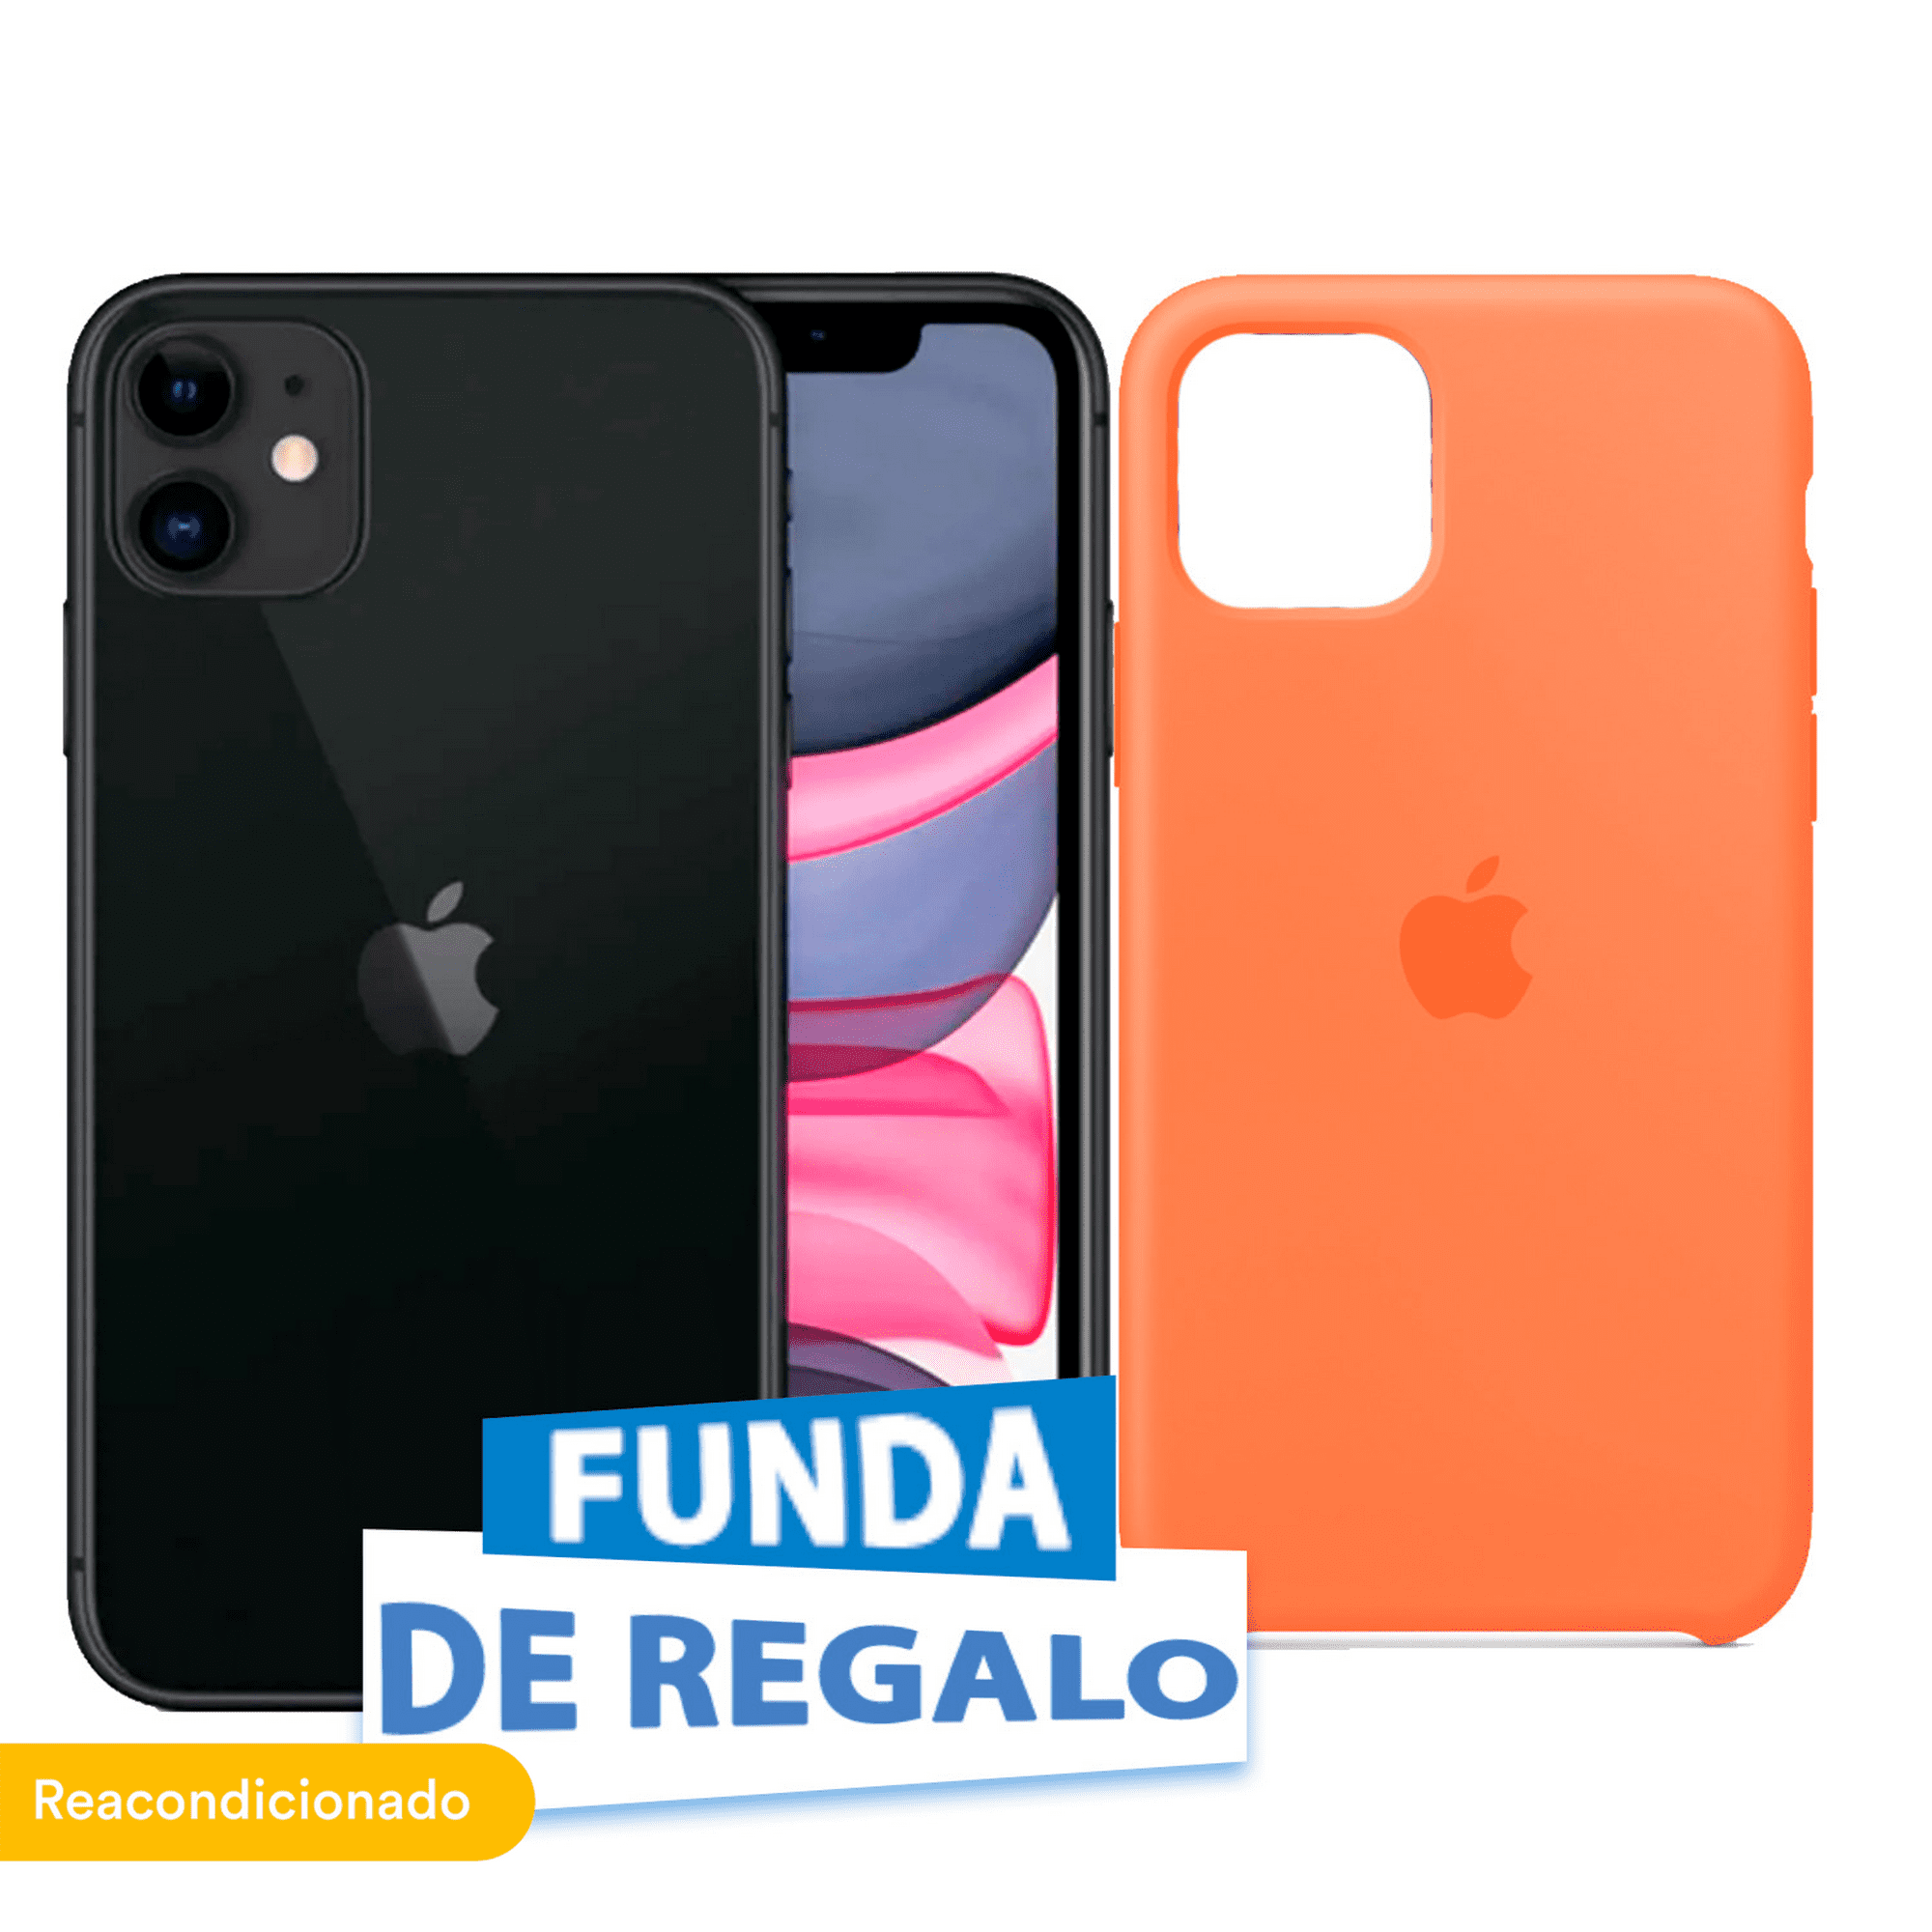 Celular Reacondicionado Apple iPhone 11 128GB Rojo + Funda de Regalo, Apple